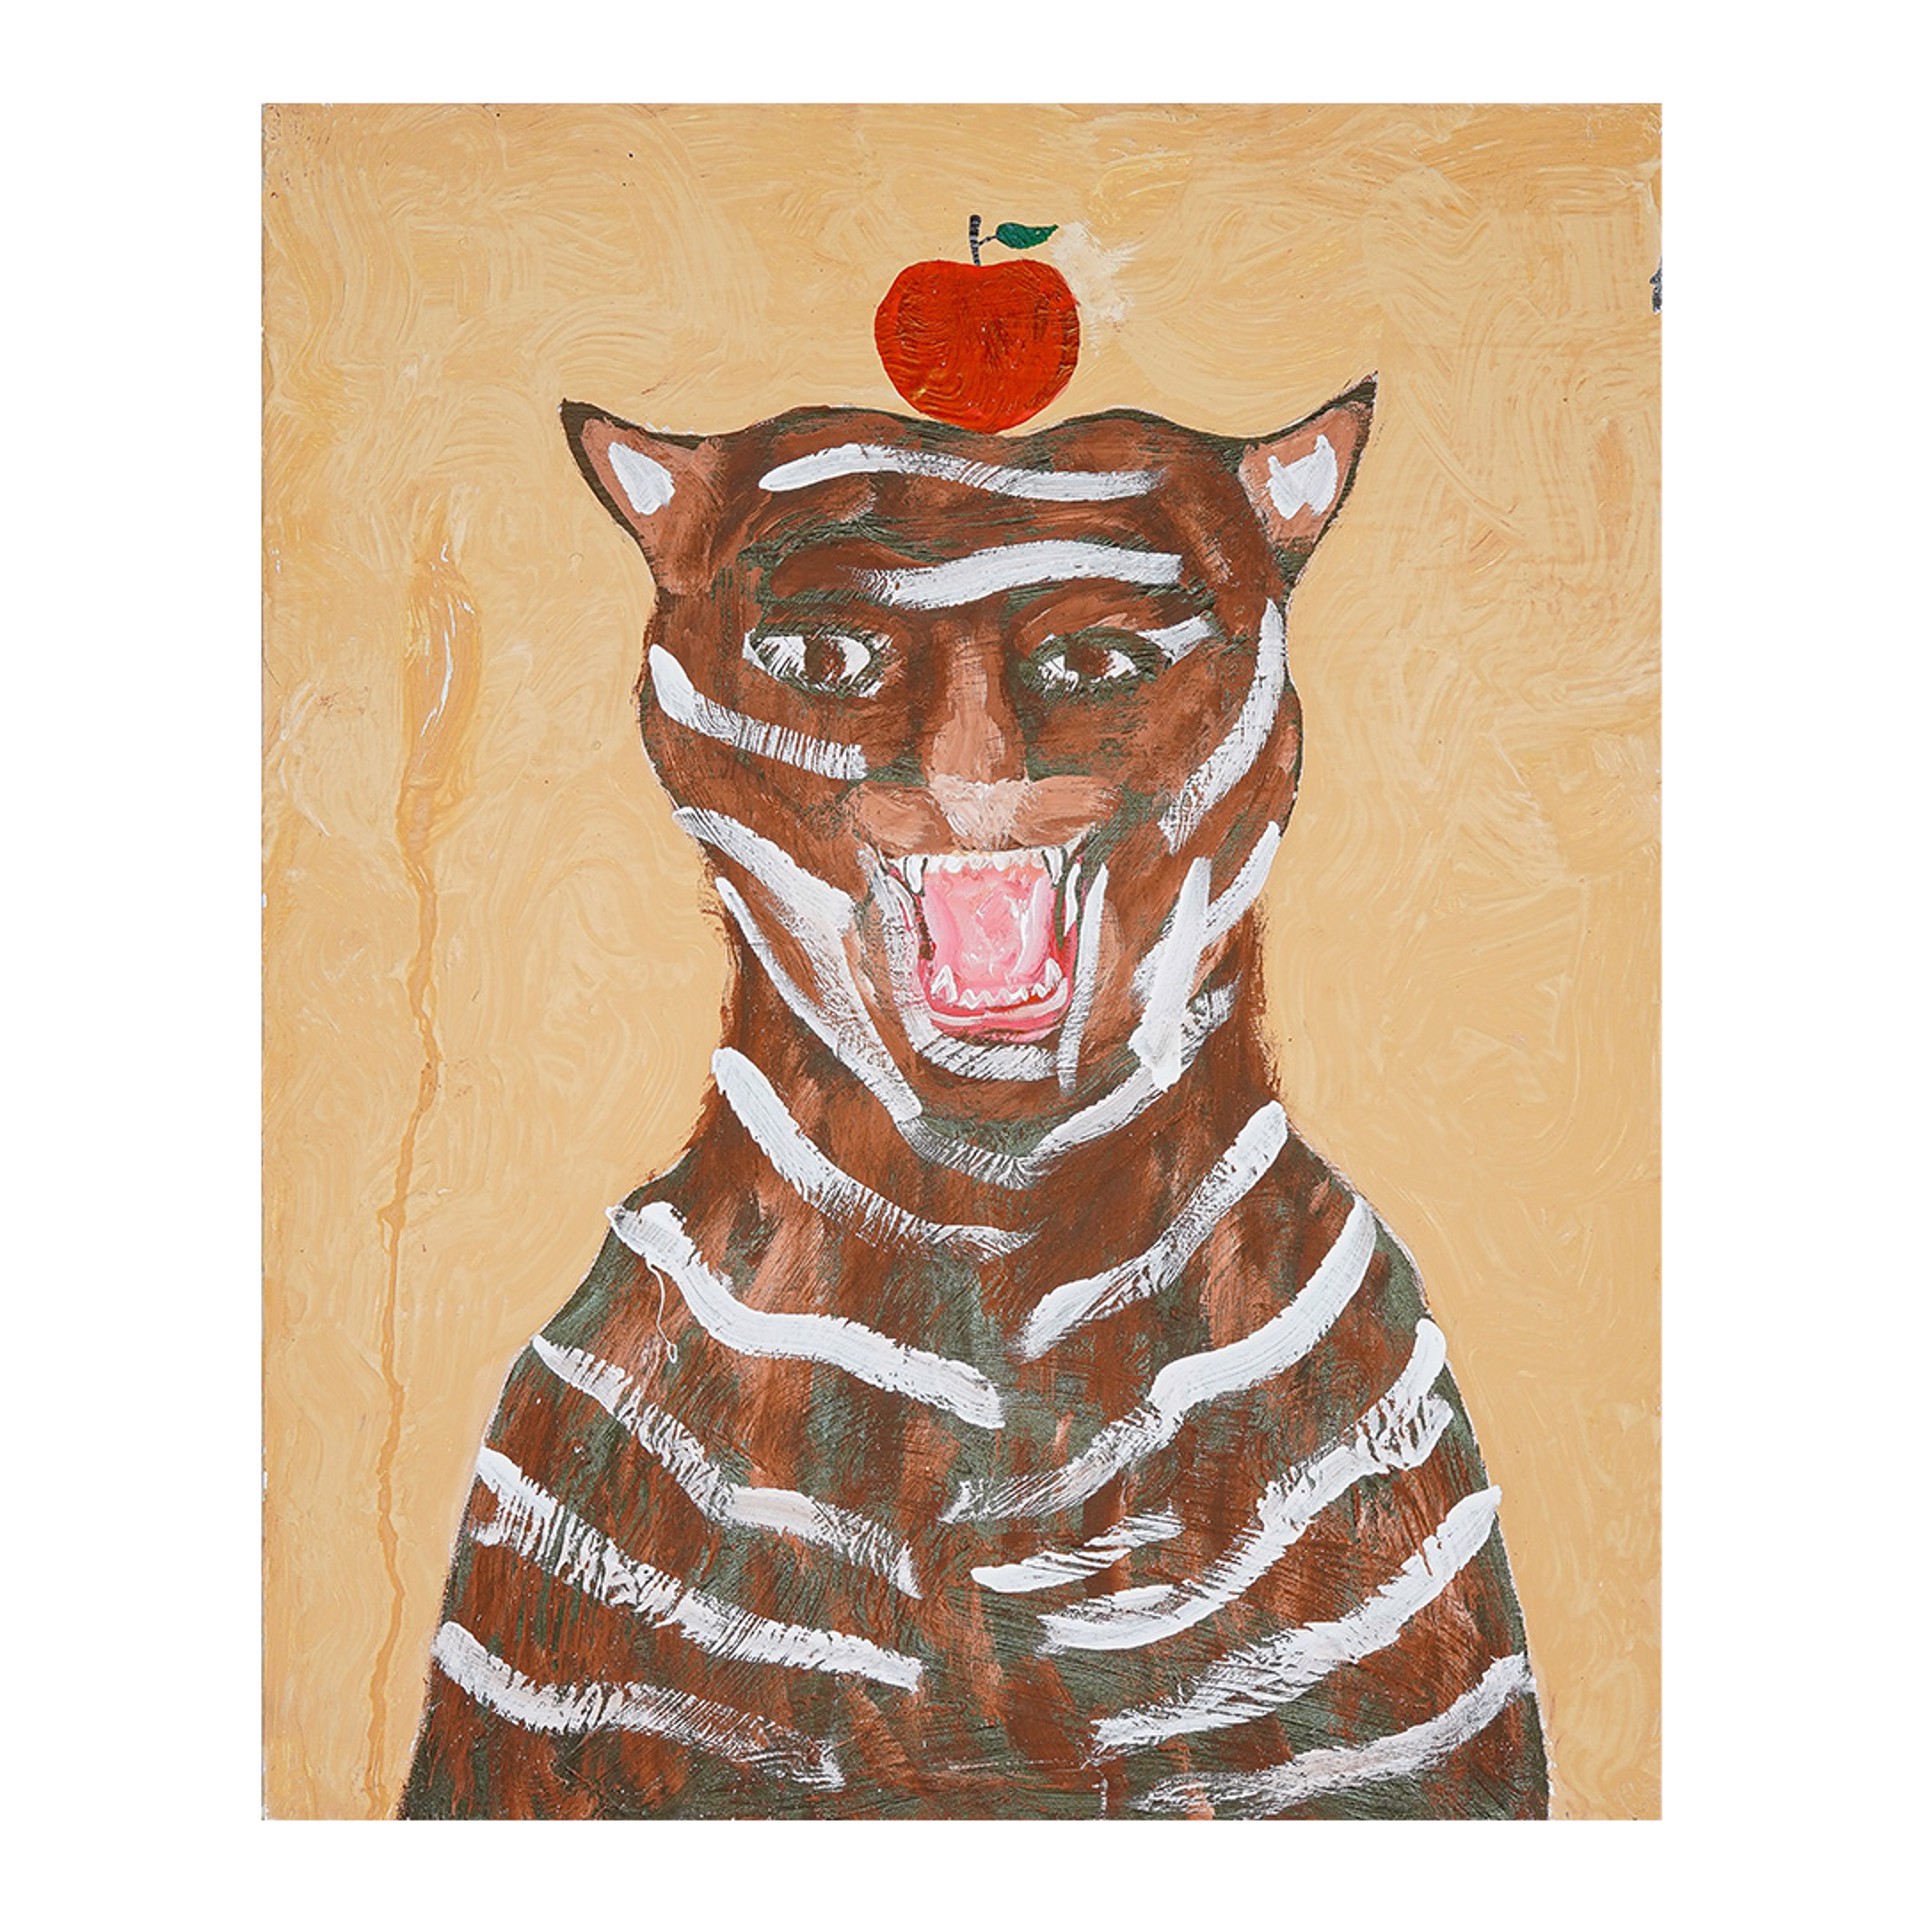 Tiger Sings Apple by Riz Riz Rizz